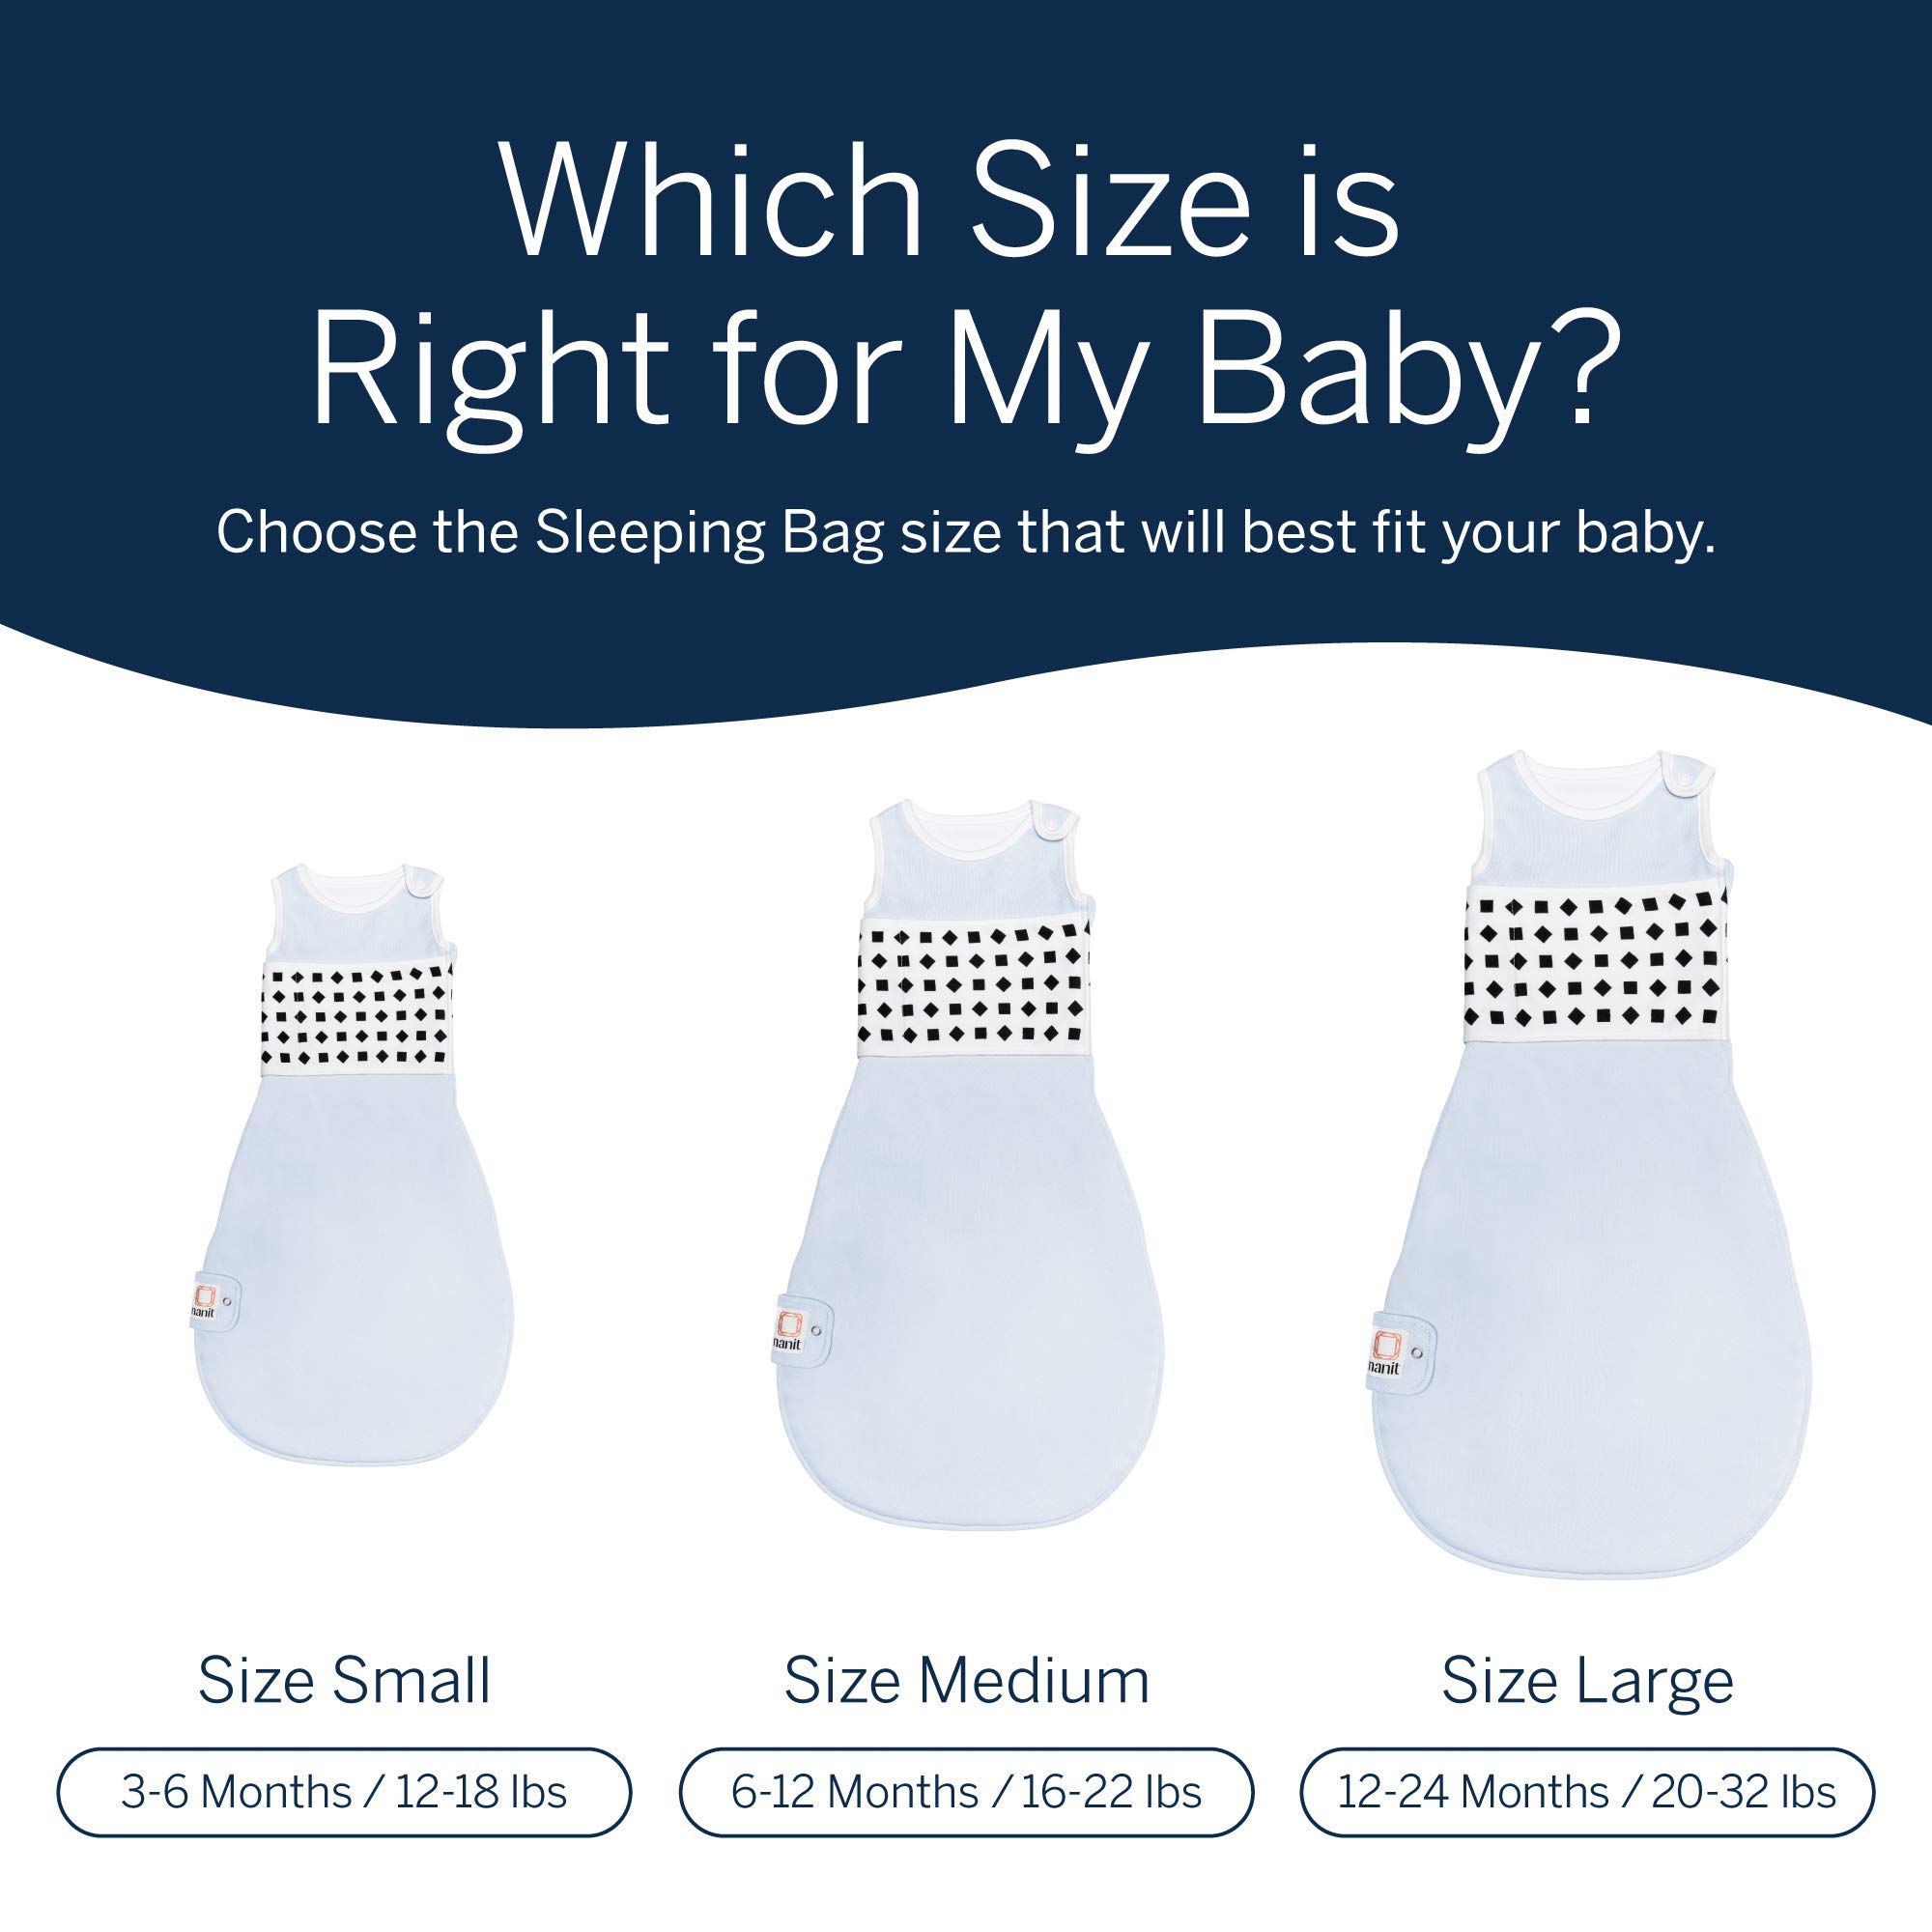 Nanit Breathing Wear Sleeping Bag – 100% Cotton Baby Sleep Sack - Works Pro Baby Monitor to Track Breathing Motion Sensor-Free, Real-Time Alerts, Size Large, 12-24 Months, Powder Blue